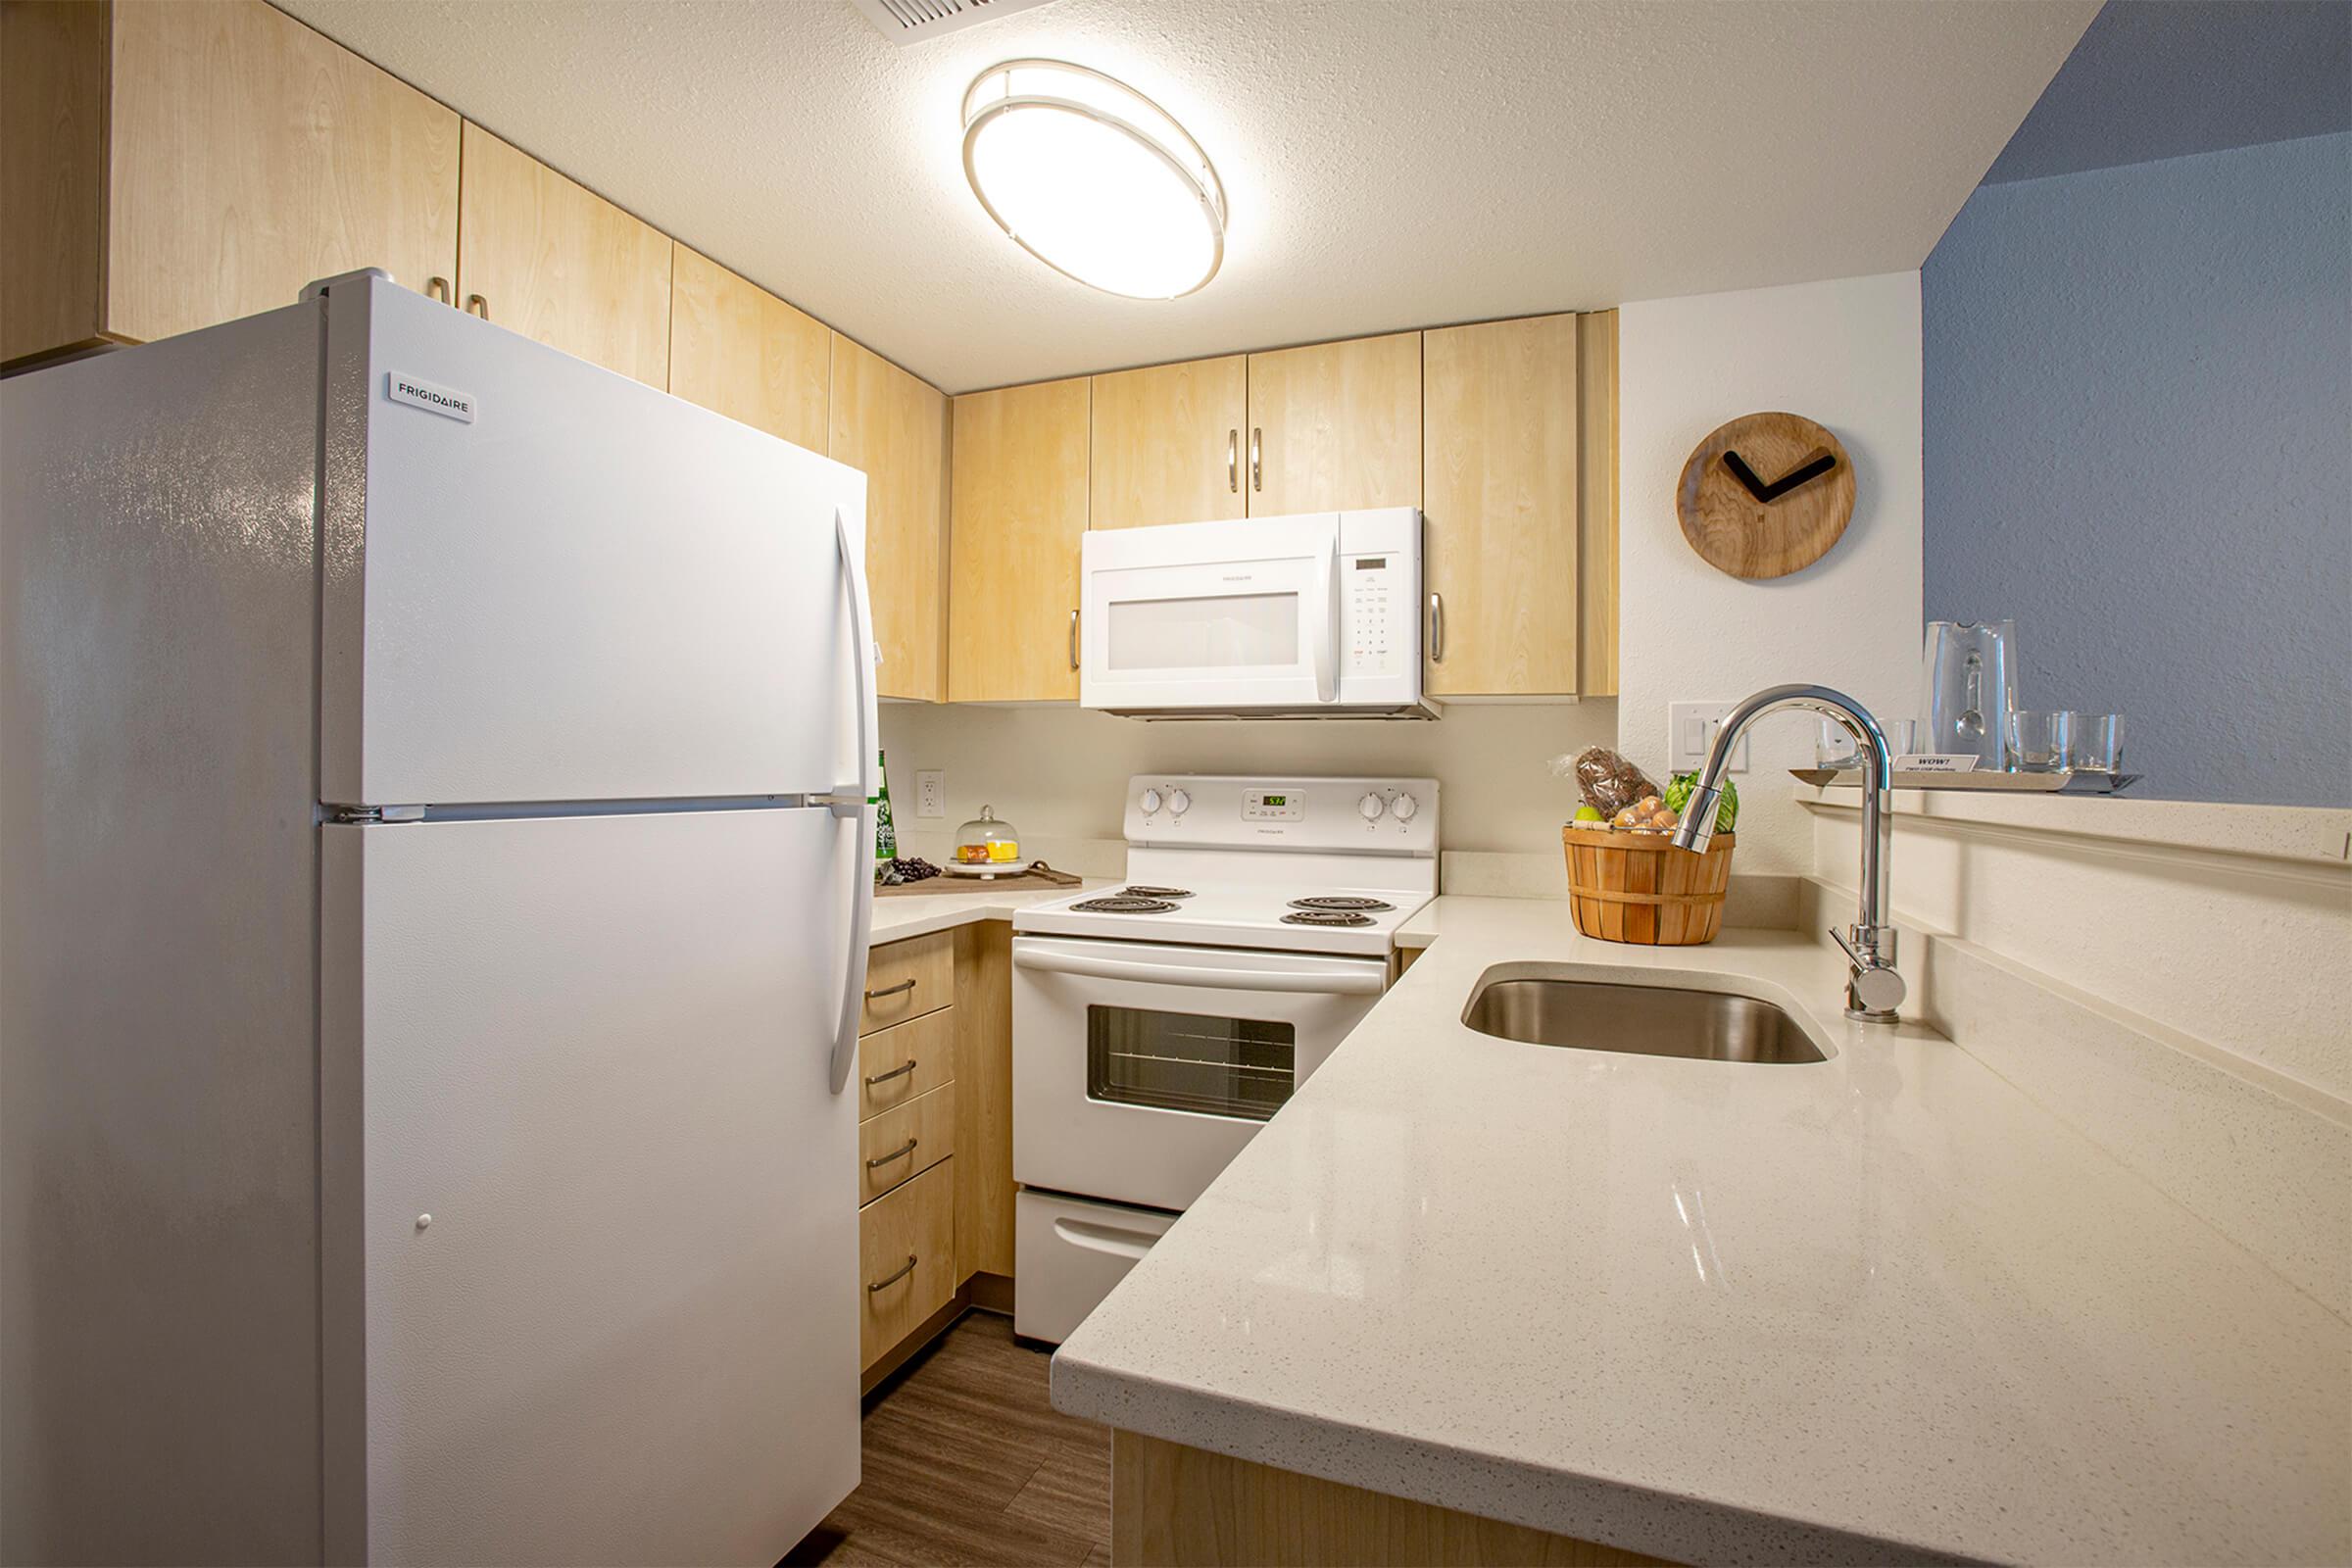 Phoenix, AZ apartment kitchen with large quartz counter-space, light wood cabinets, and white appliances